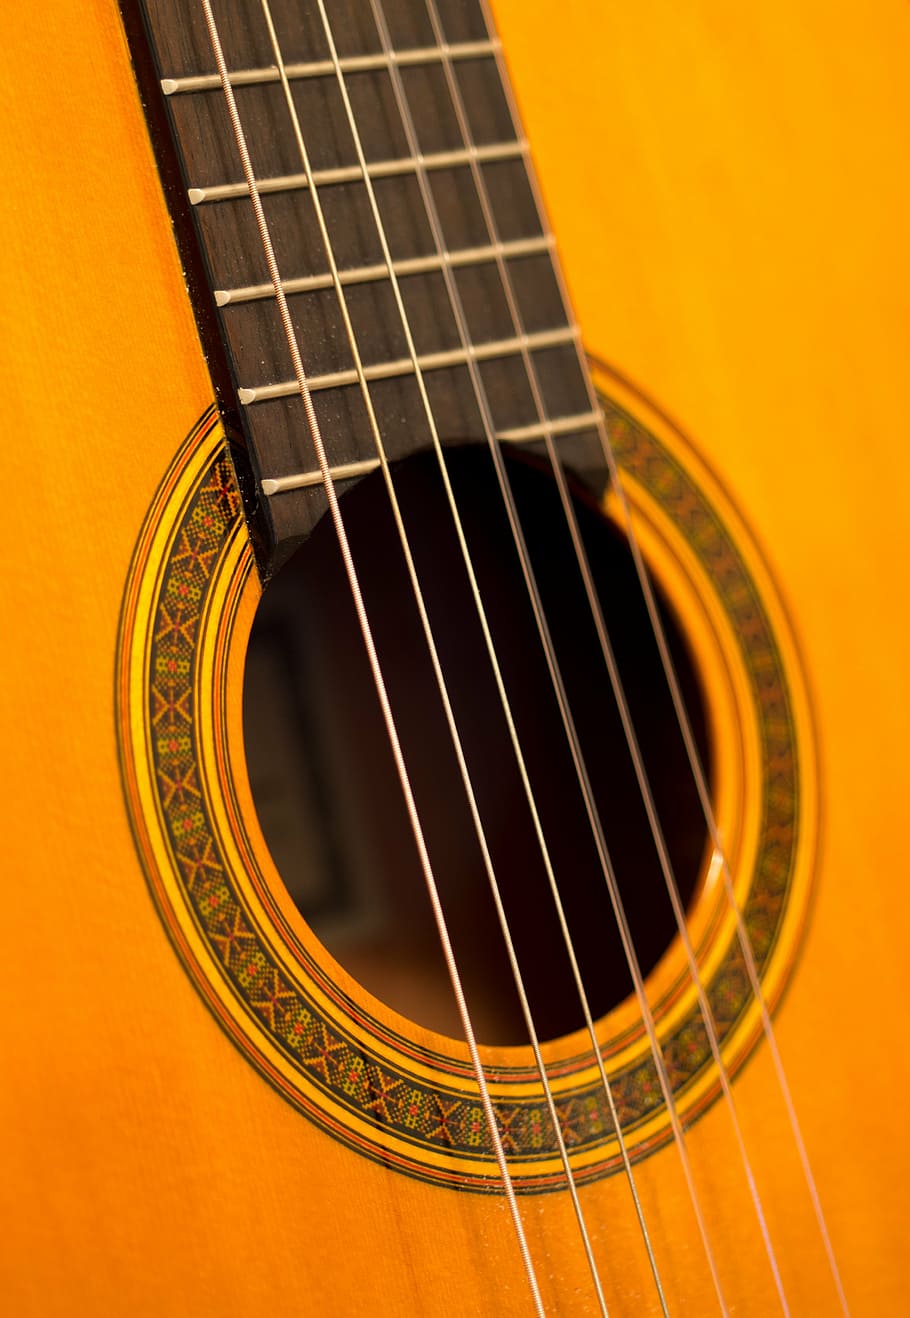 fotografía de primer plano, cuerda de guitarra, guitarra, guitarra clásica, música, instrumento, musical, acústica, español, cuerdas